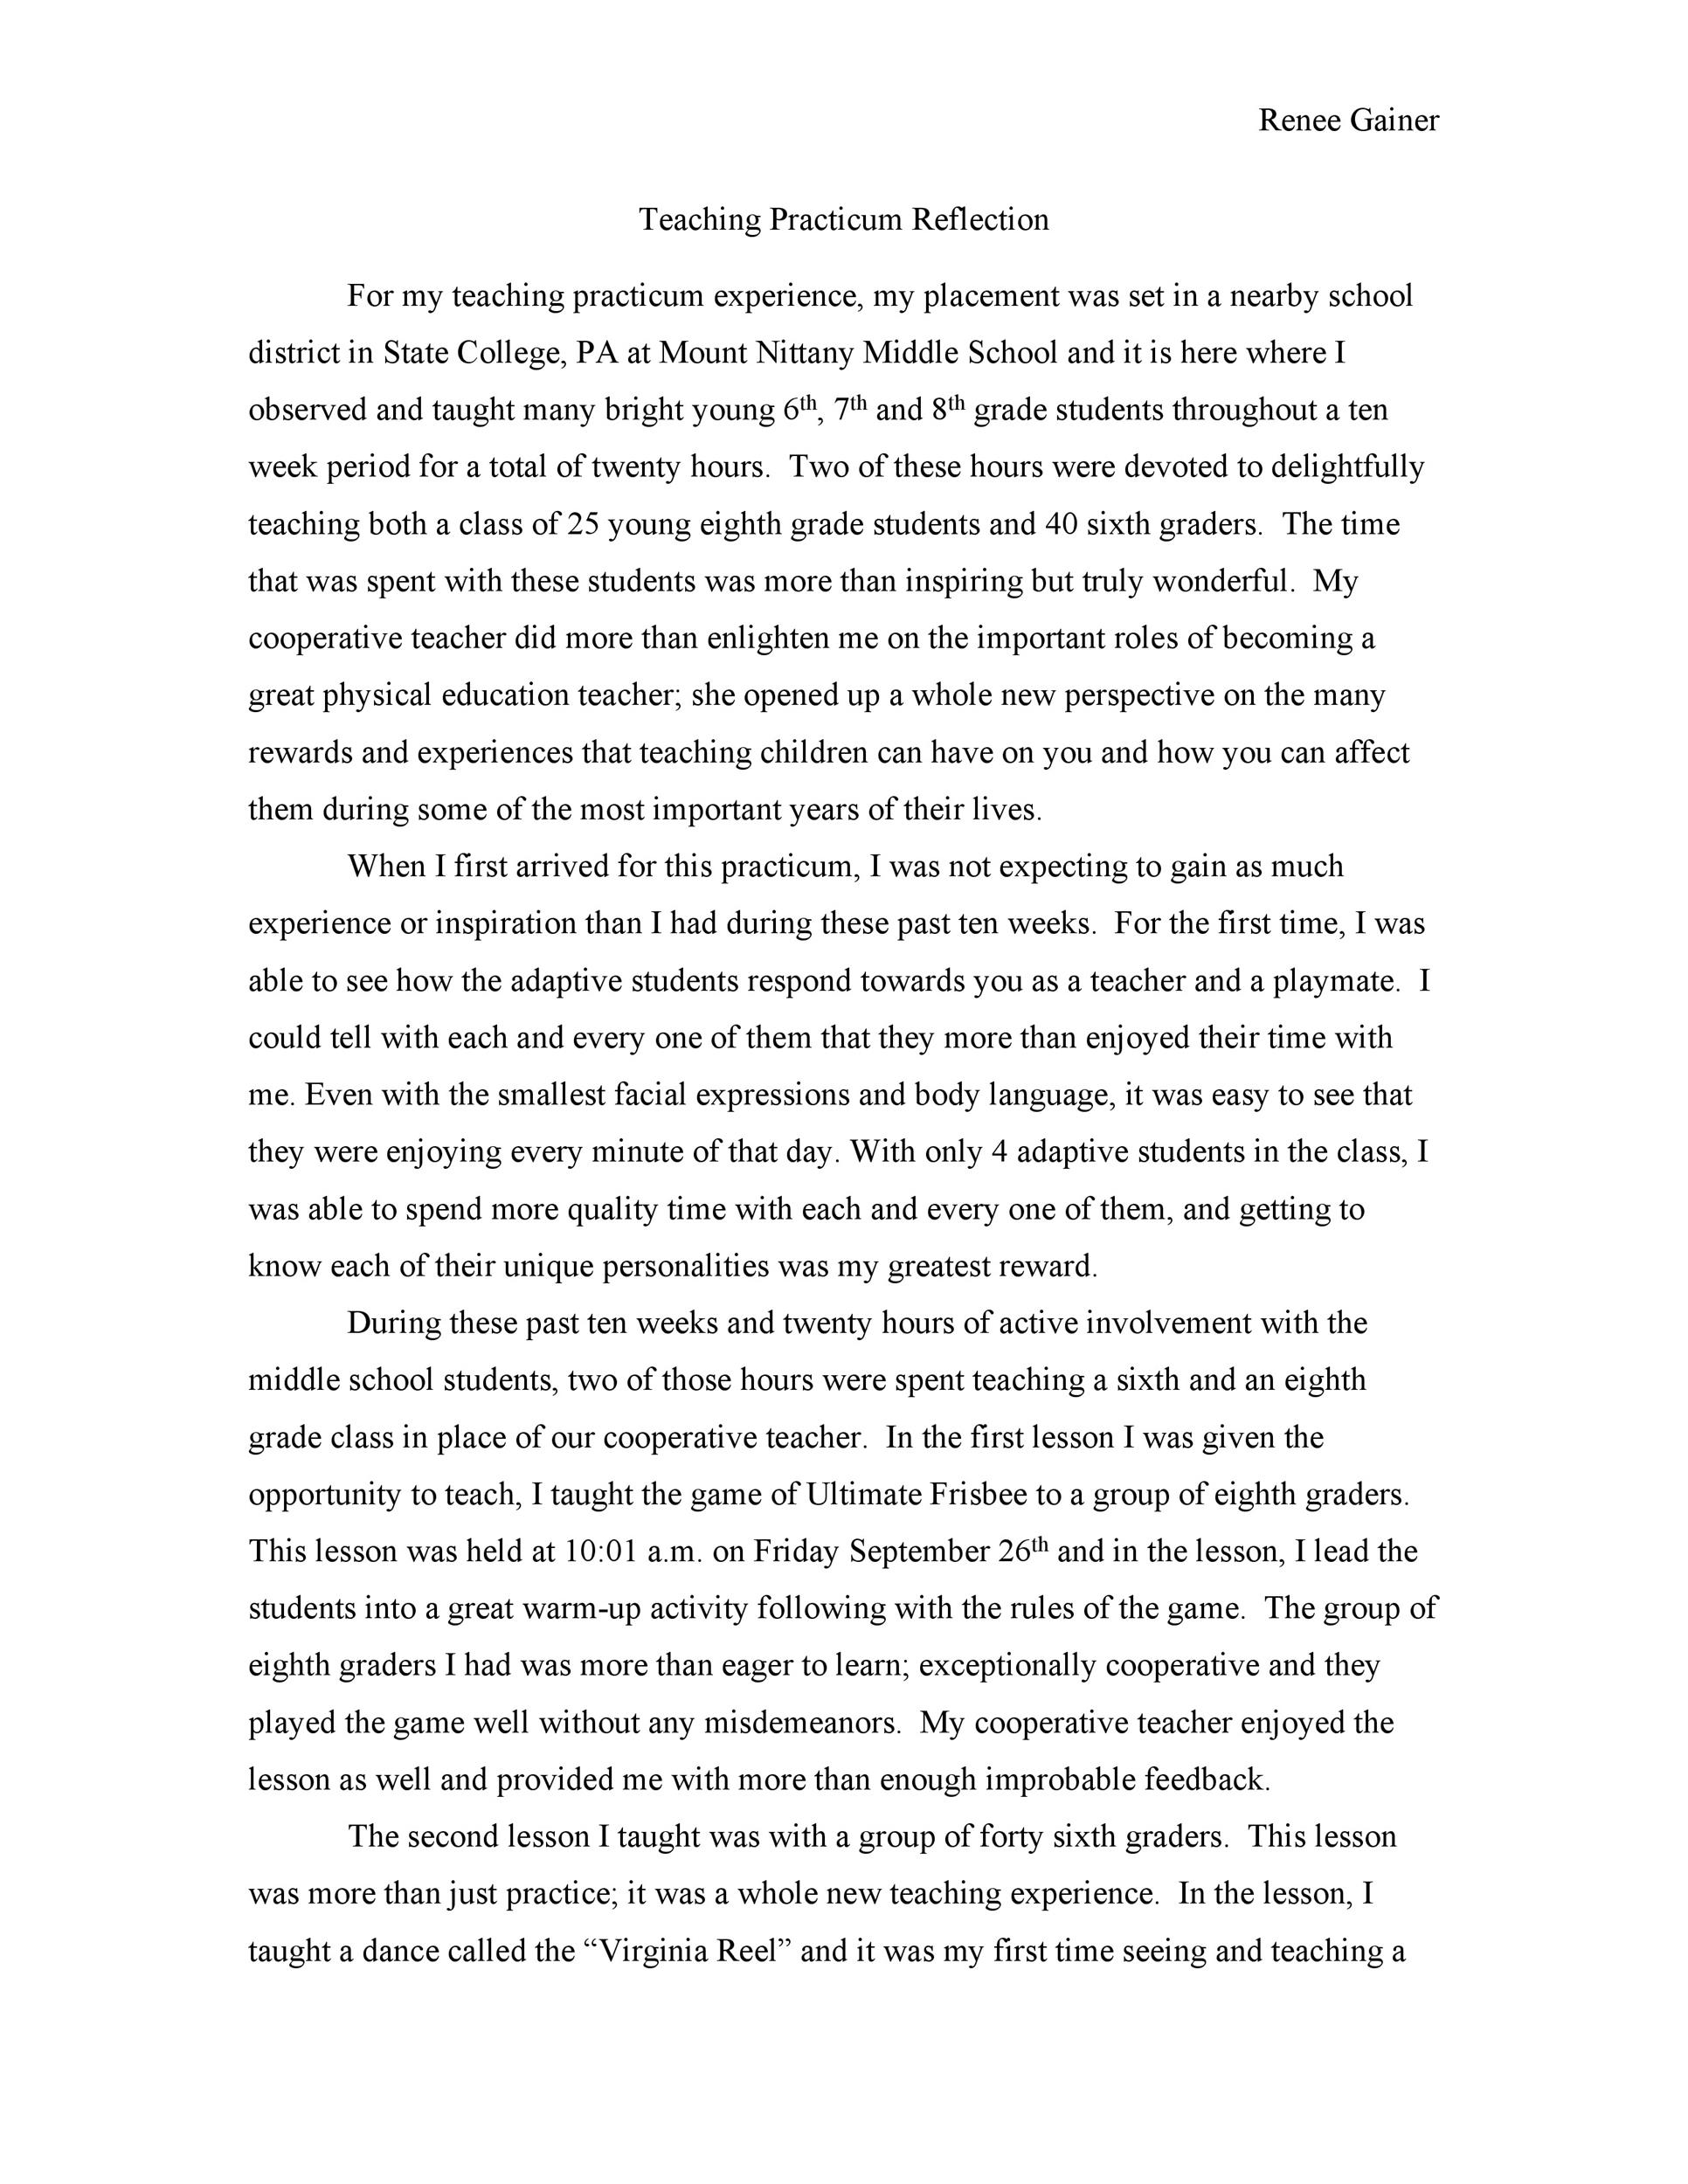 English reflective essay example